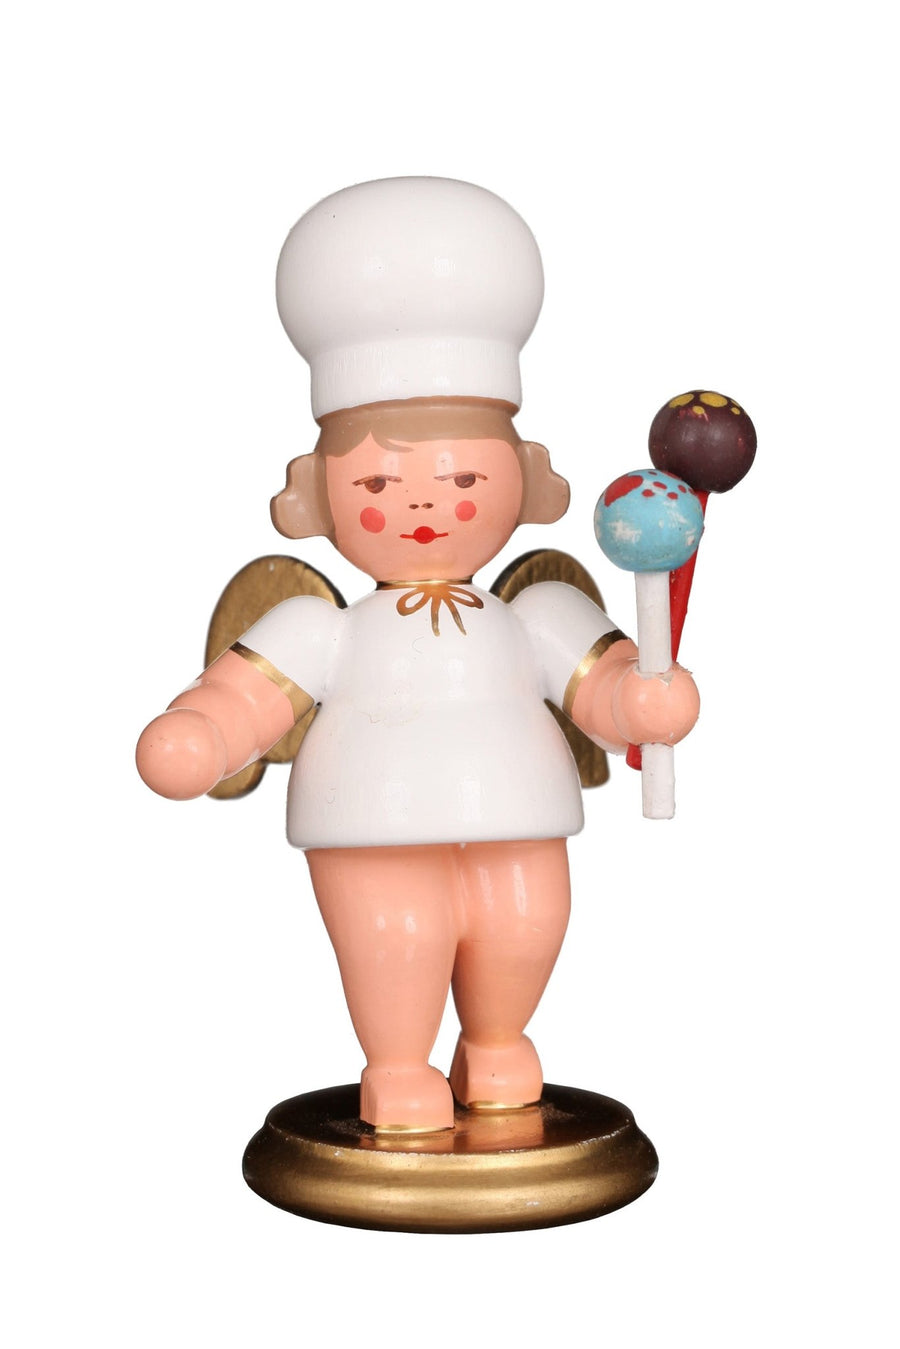 Ulbricht Miniaturen 'Bäckerengel mit Cake-Pops - 7.5cm' 2019-ULB-31275